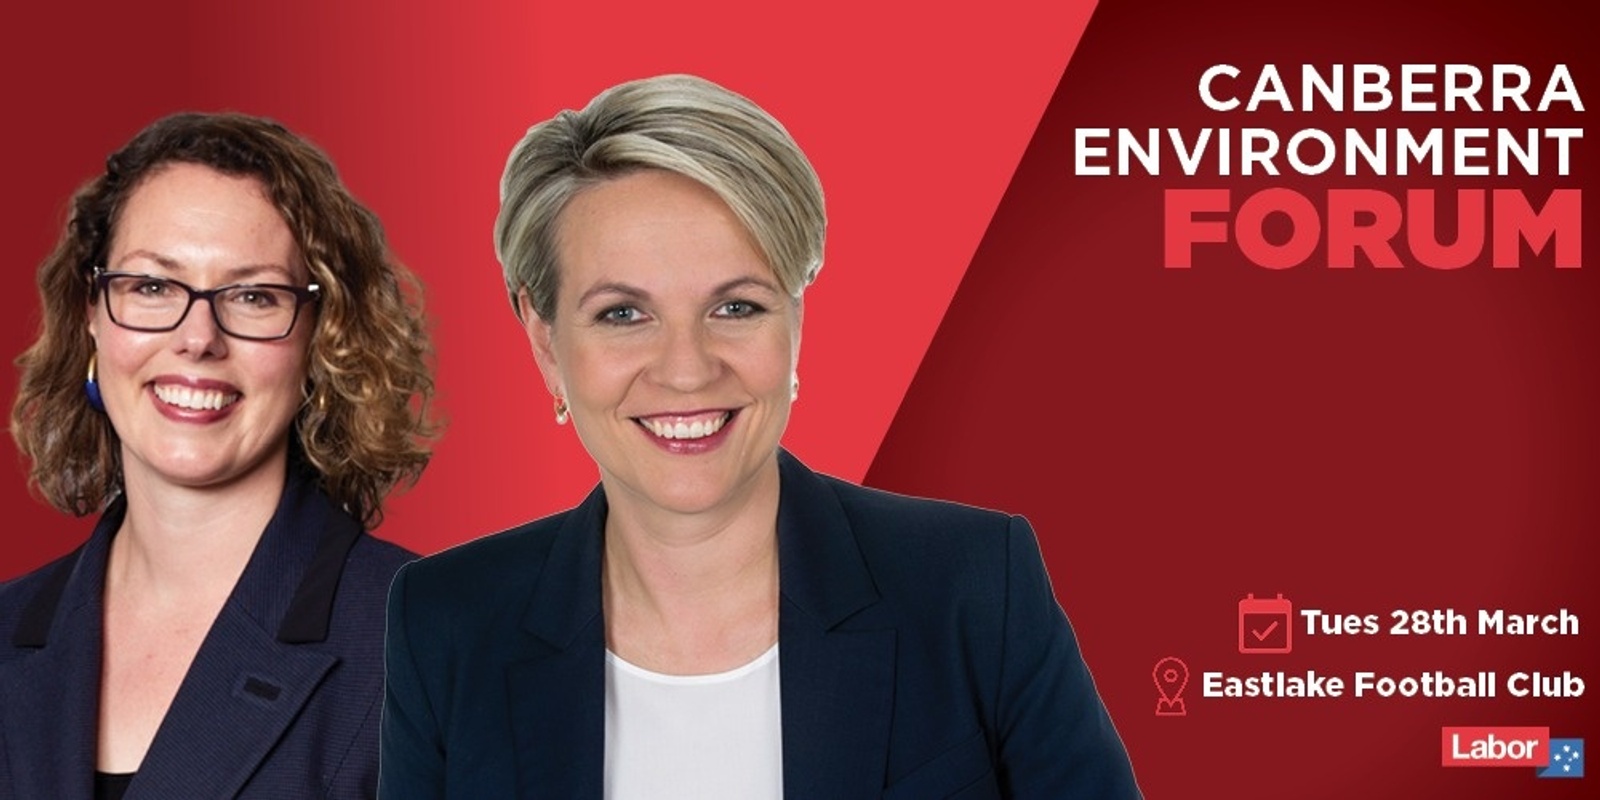 Canberra Environment Forum with Minister Tanya Plibersek MP